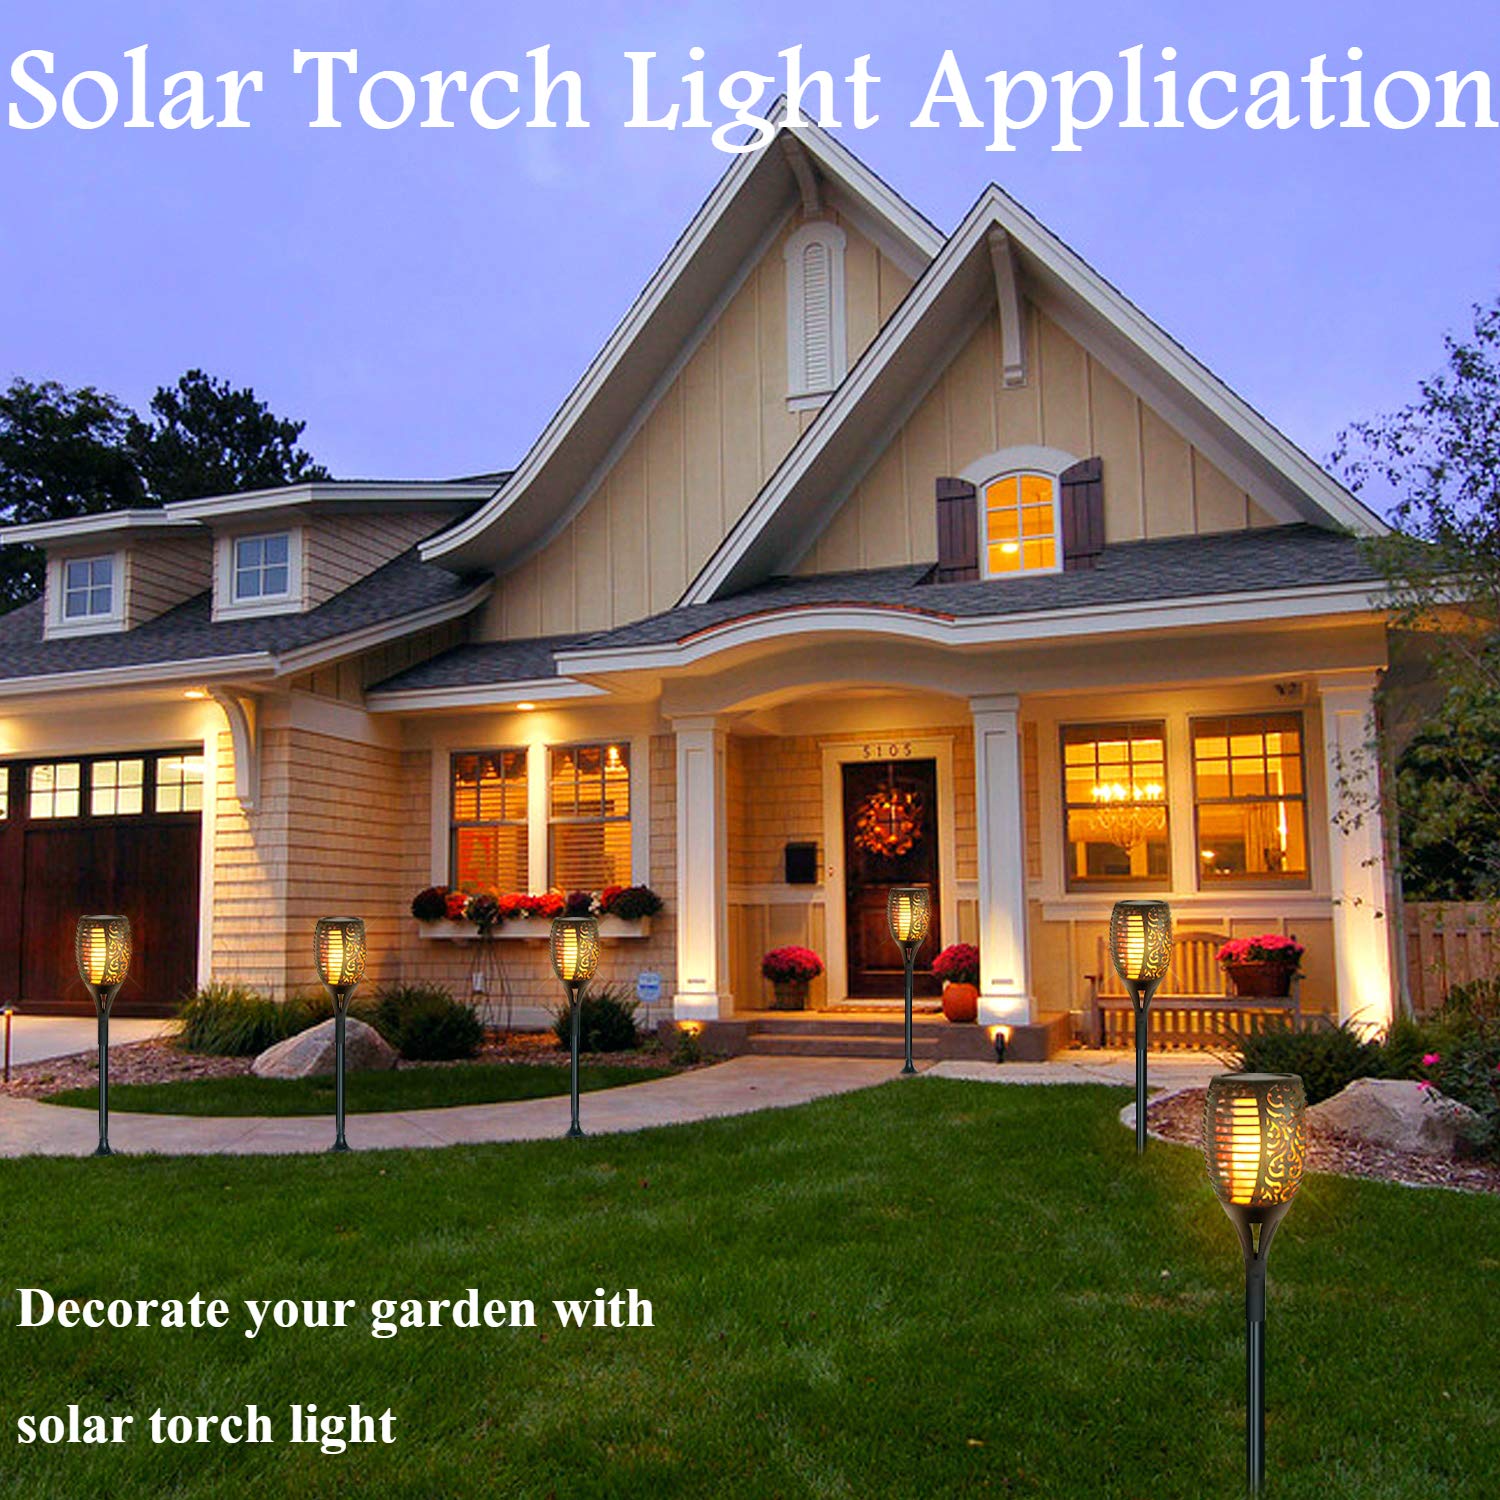 Solar-Power-51-LED-Torch-Garden-Light-Flickering-Fire-Flame-Outdoor-Garden-Lawn-Lamp-1587398-7